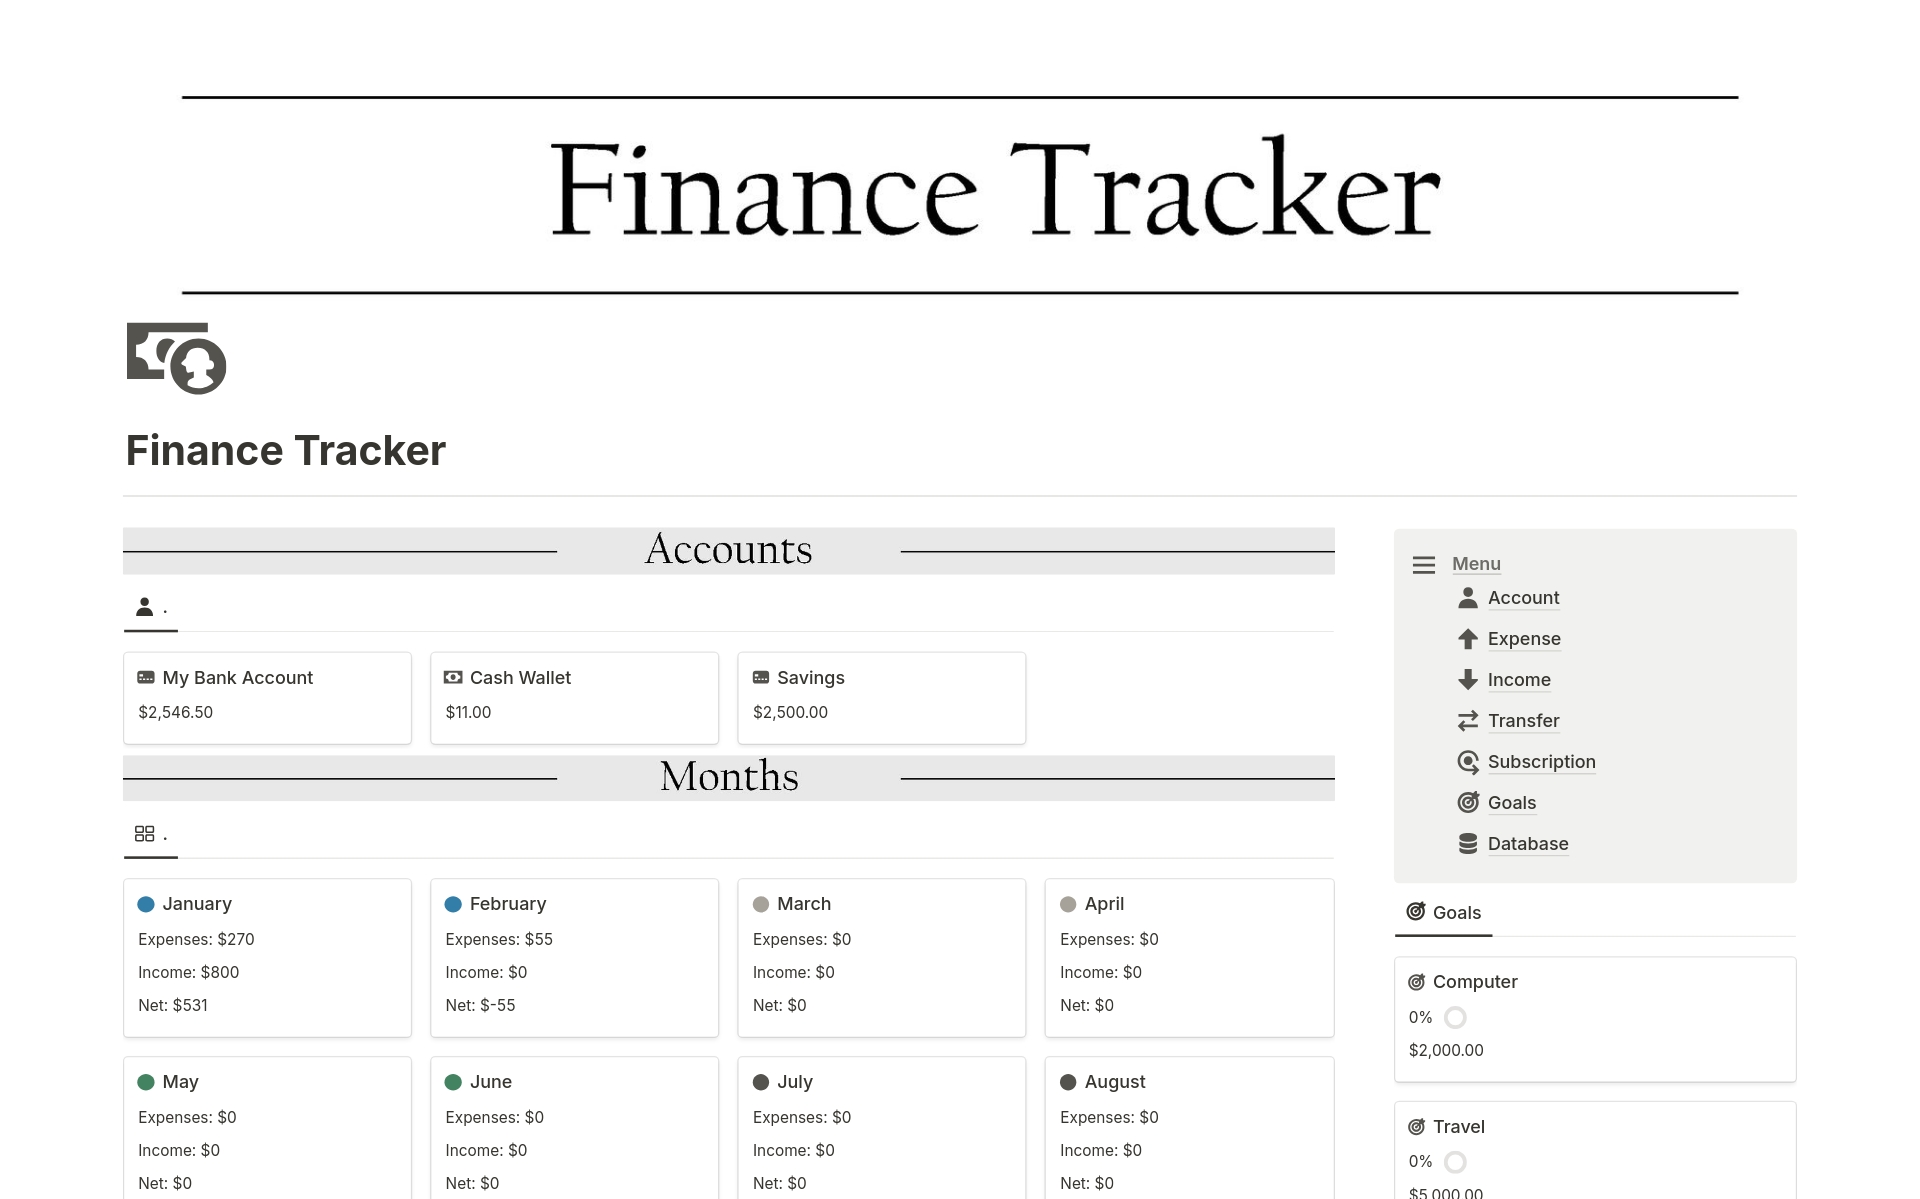 Aperçu du modèle de Finance Tracker